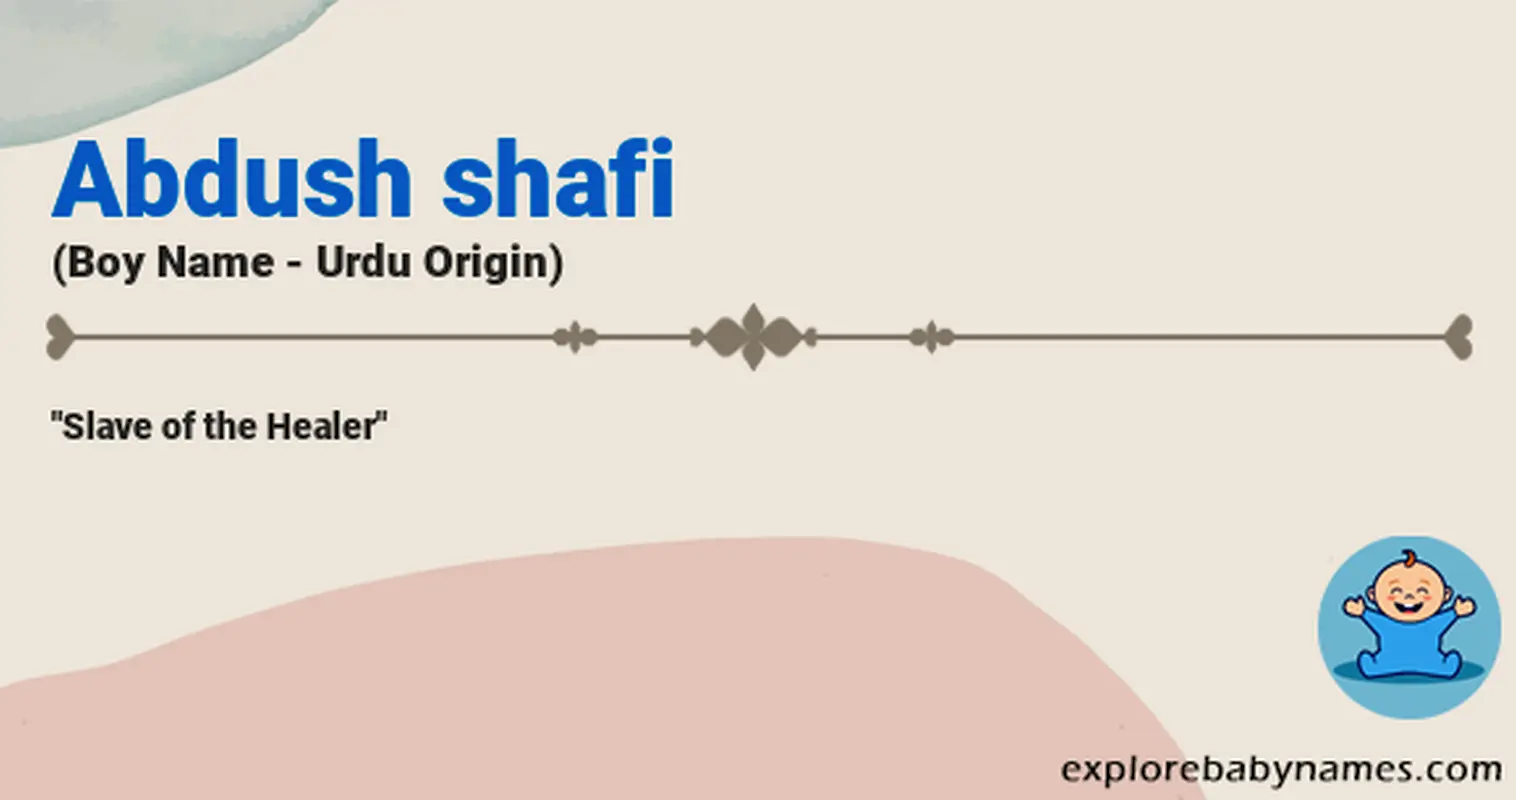 Meaning of Abdush shafi